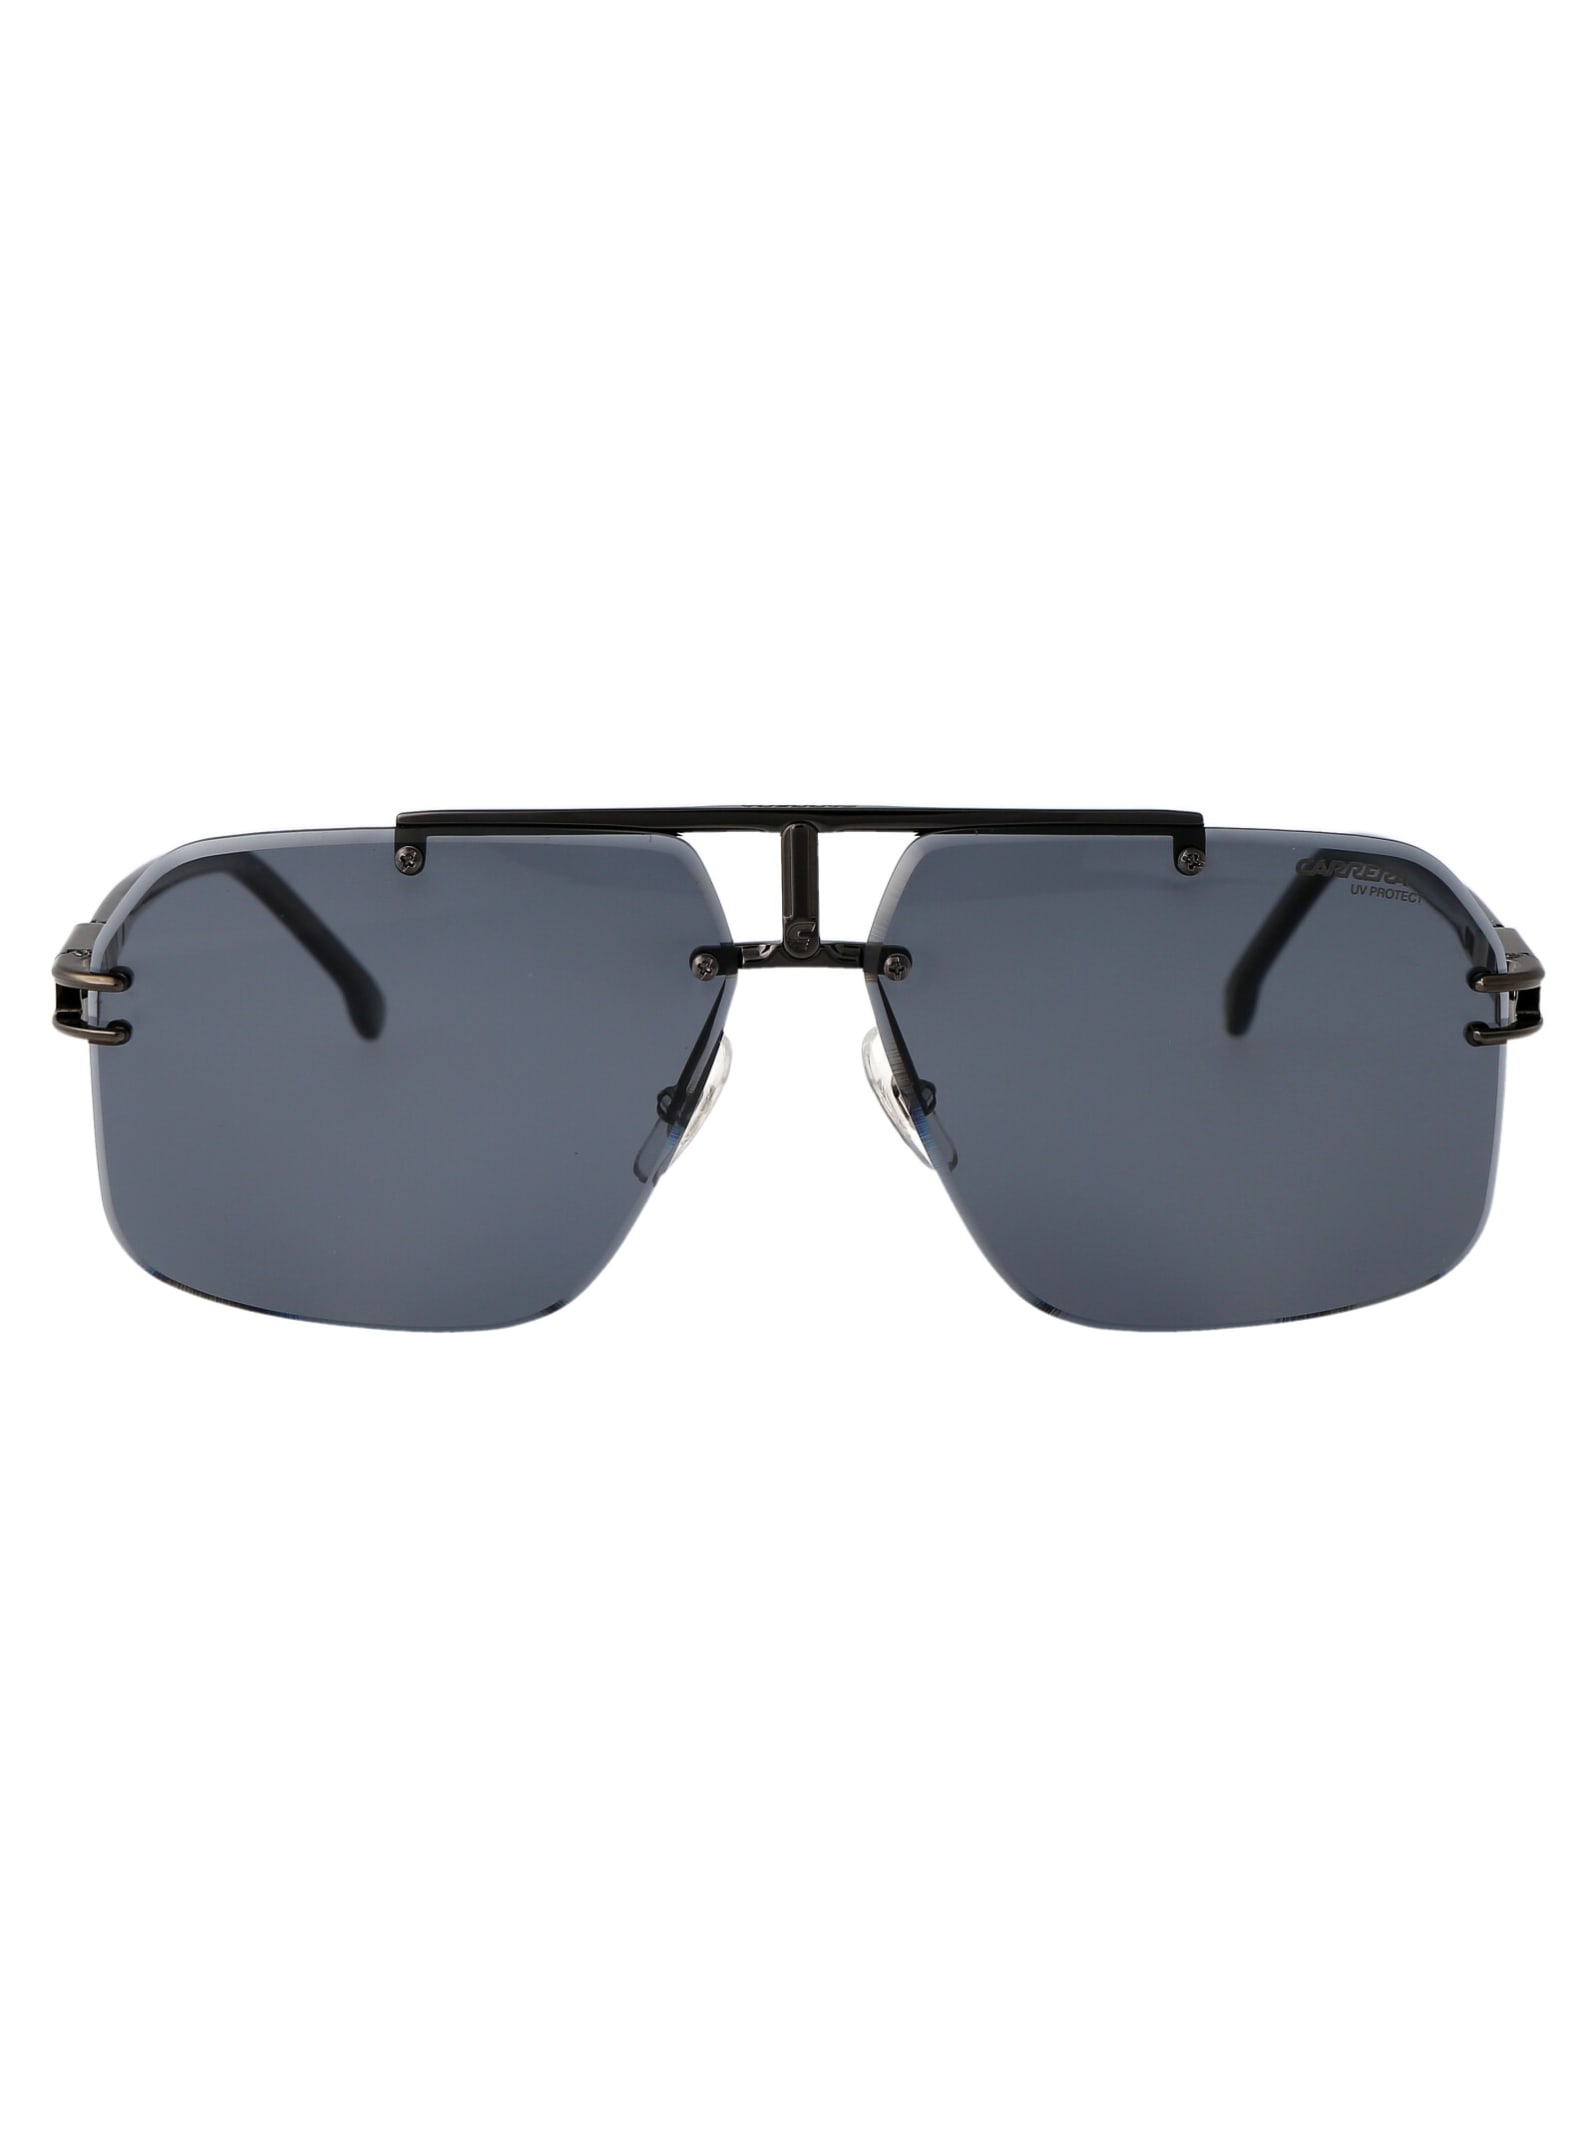 Carrera 1054/s Sunglasses